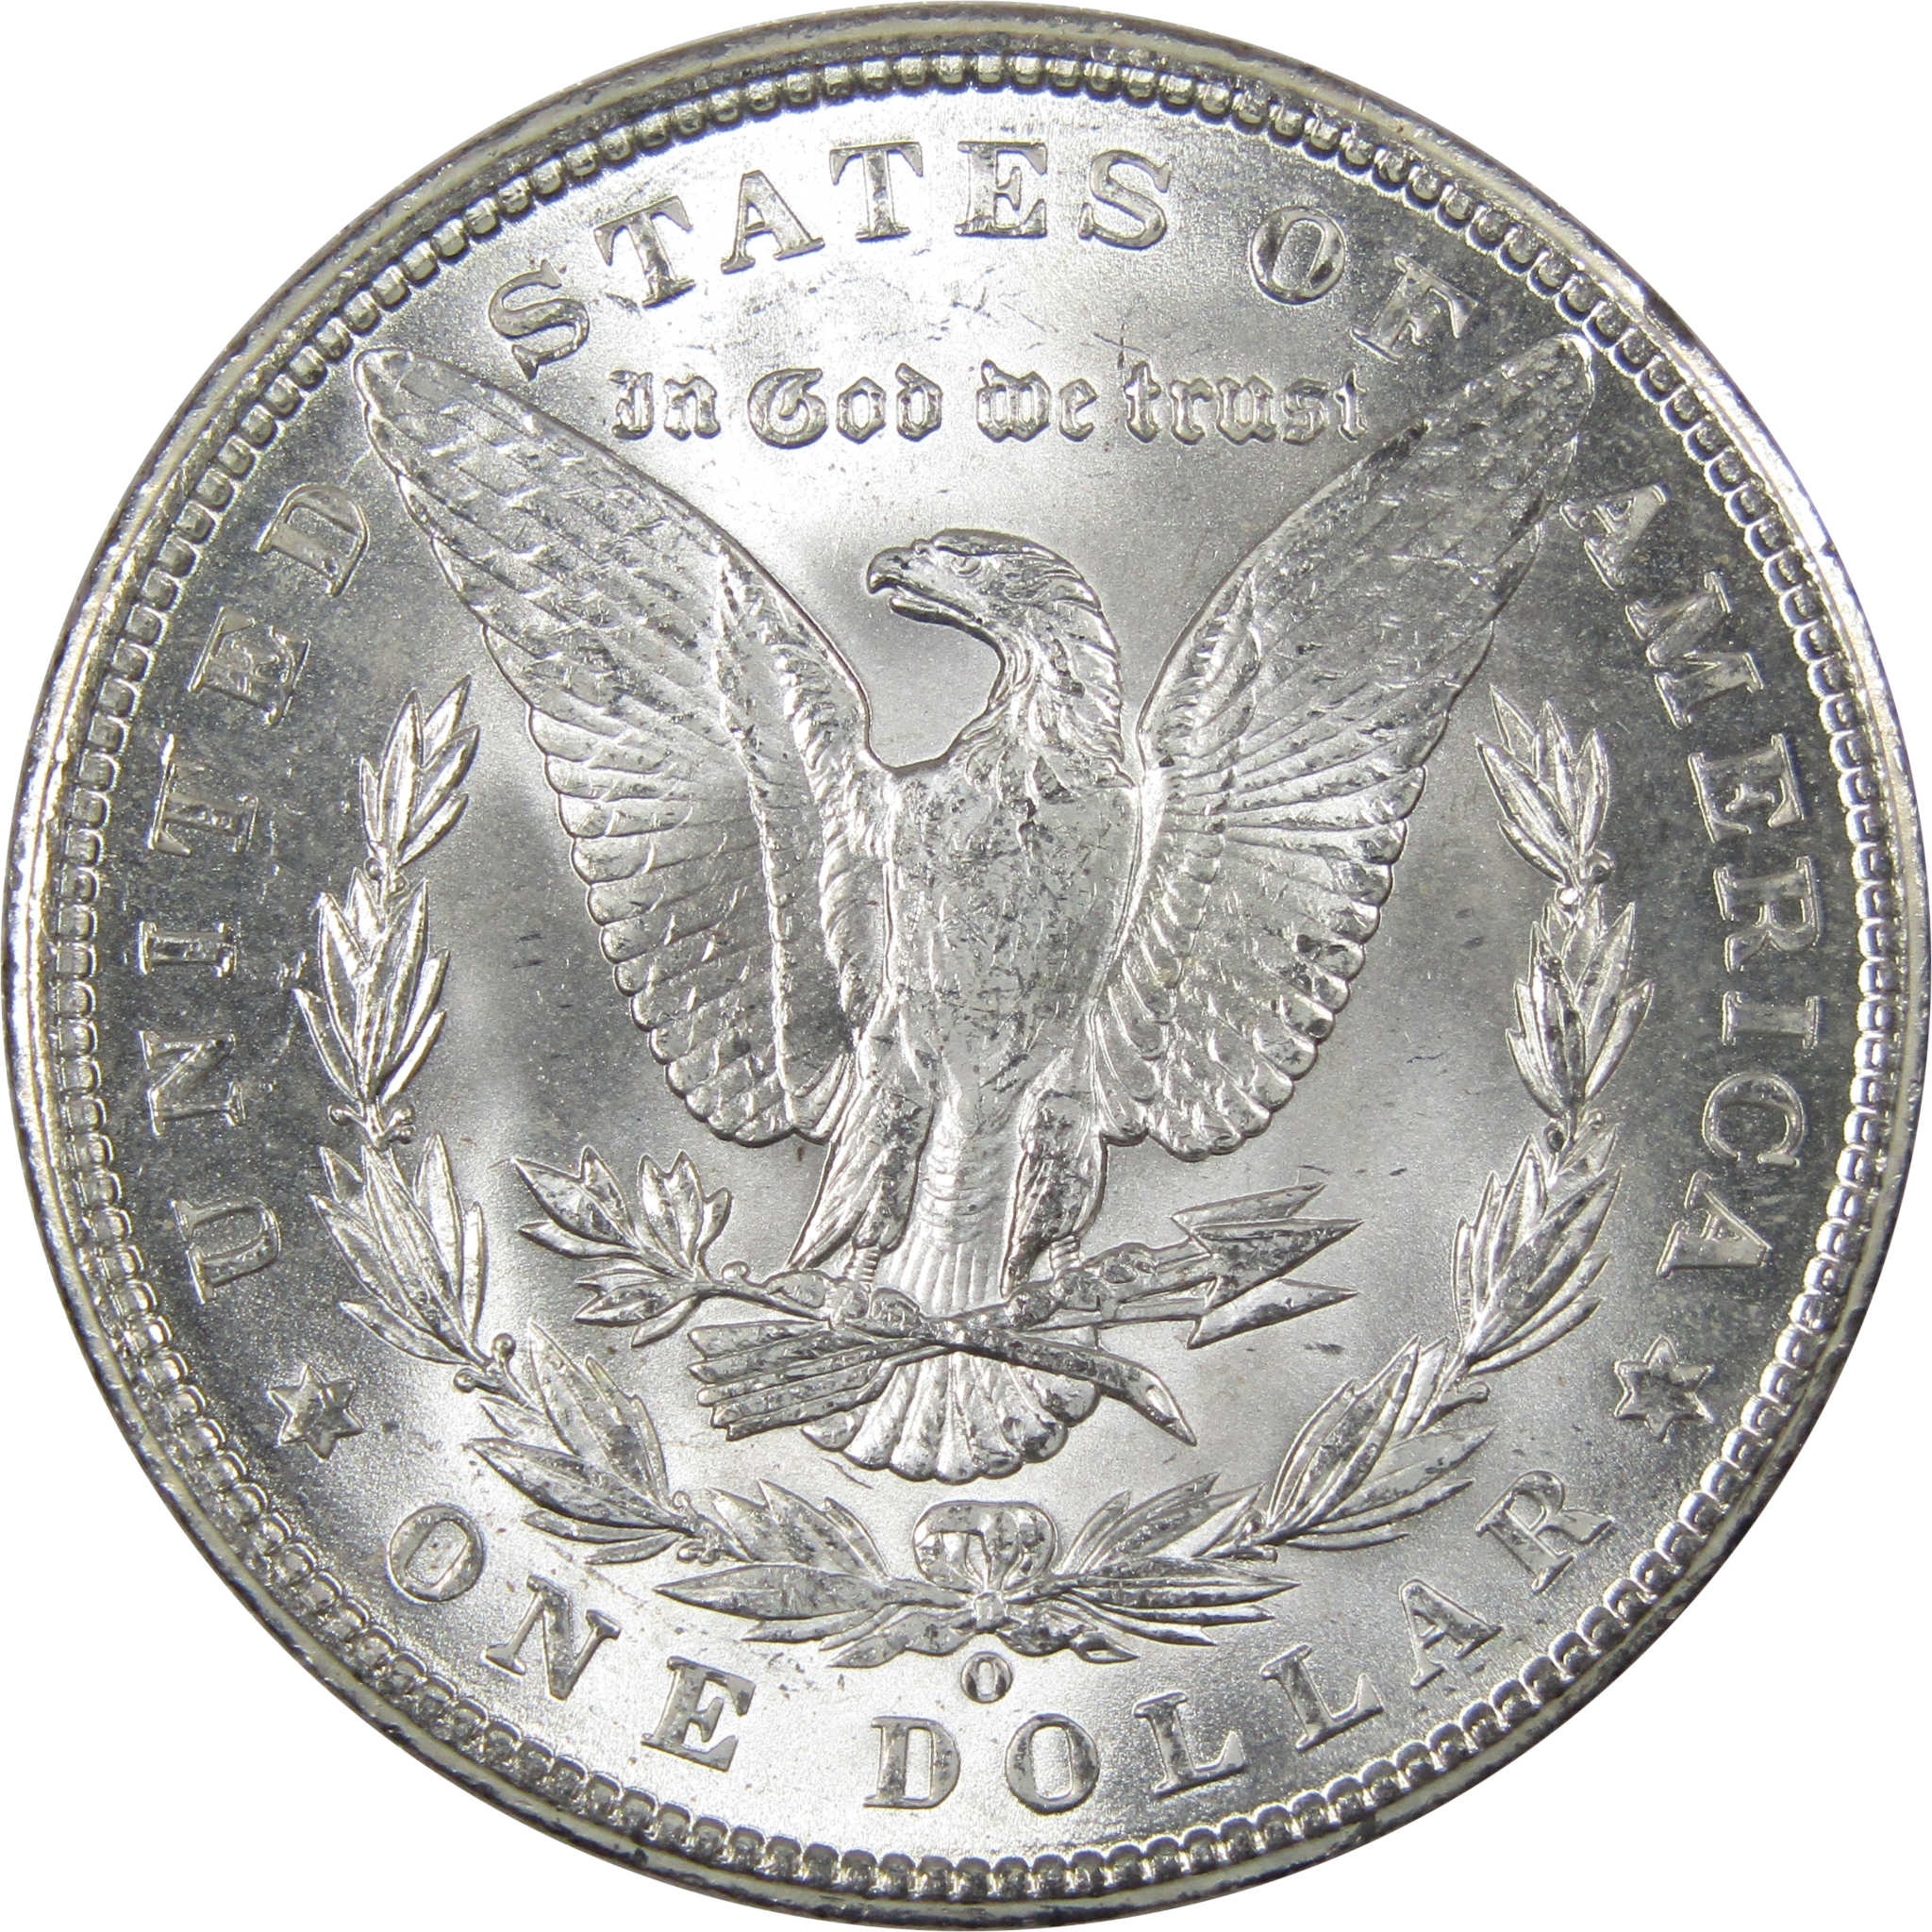 1900 O Morgan Dollar BU Uncirculated Mint State 90% Silver SKU:IPC9744 - Morgan coin - Morgan silver dollar - Morgan silver dollar for sale - Profile Coins &amp; Collectibles